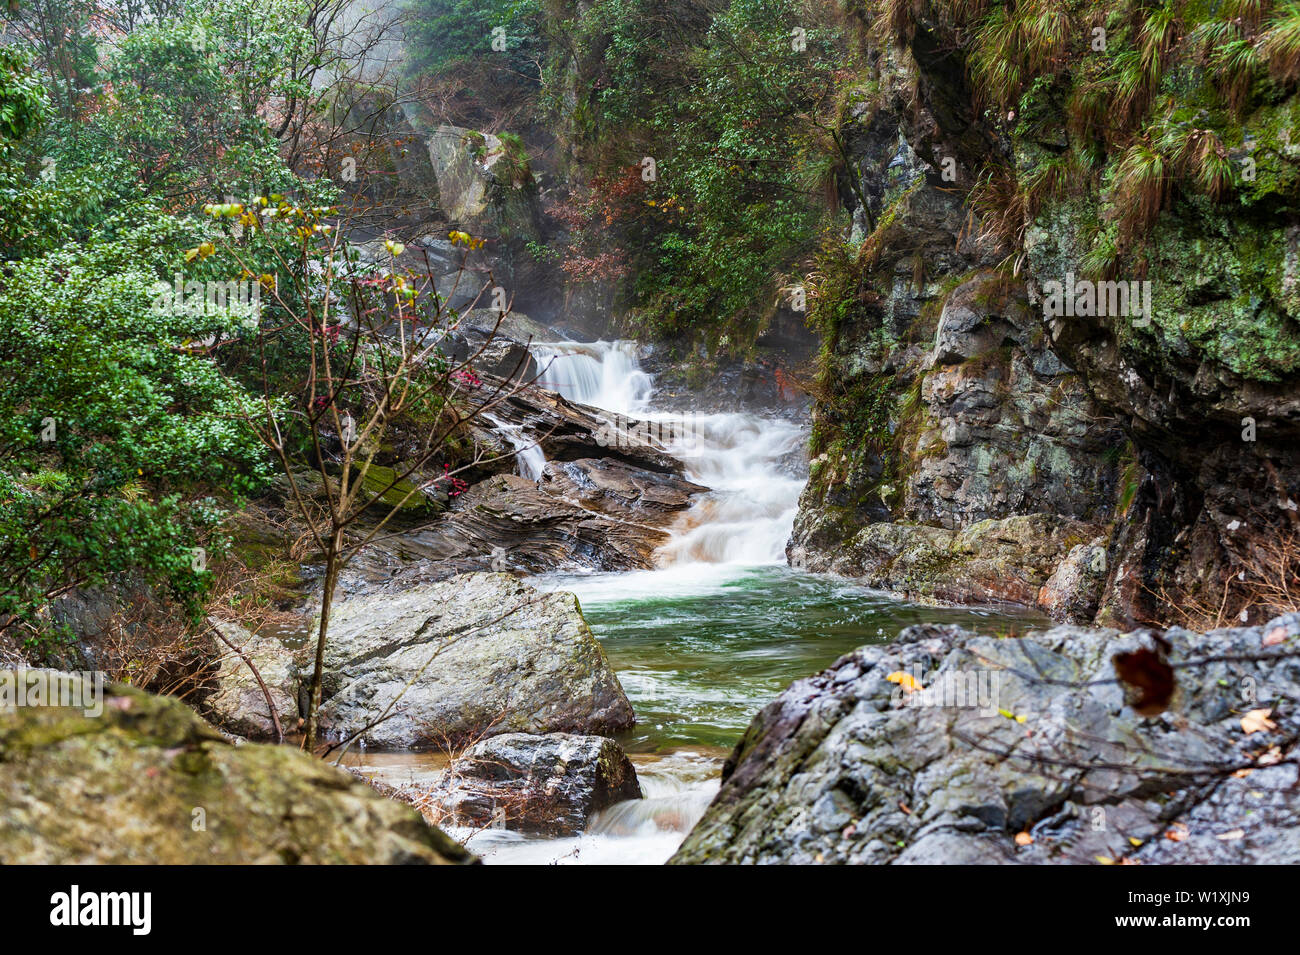 Emerald Valley near Yellow Mountain Huangshan in Anhui, China. Sometimes referred to as “Little Jiuzhaigou”. Stock Photo